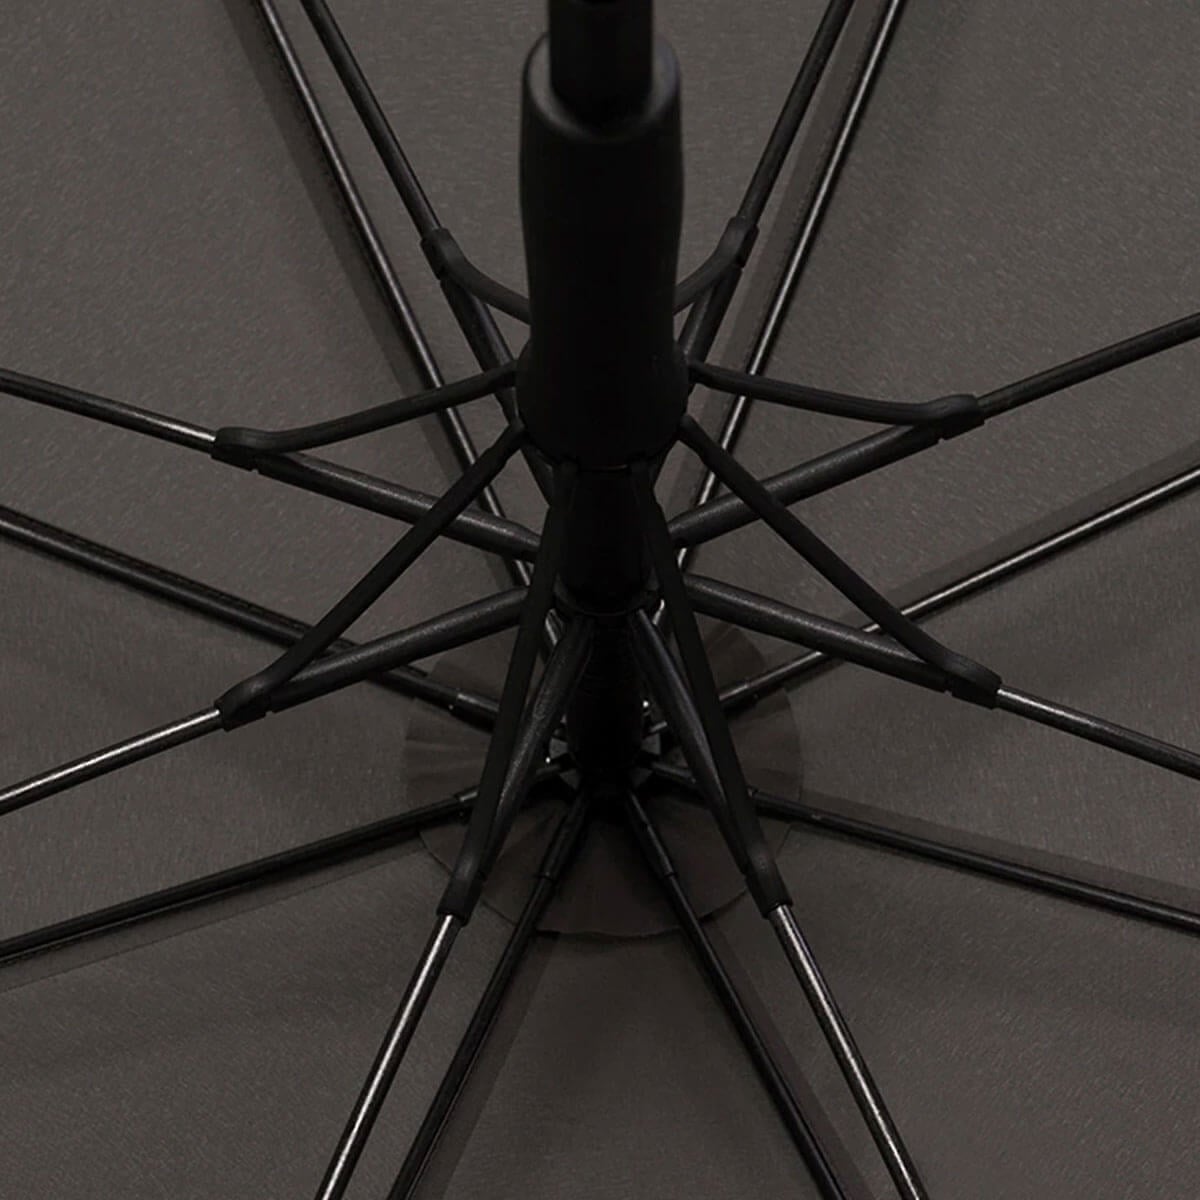 Big Automatic Business 120cm Large Umbrella